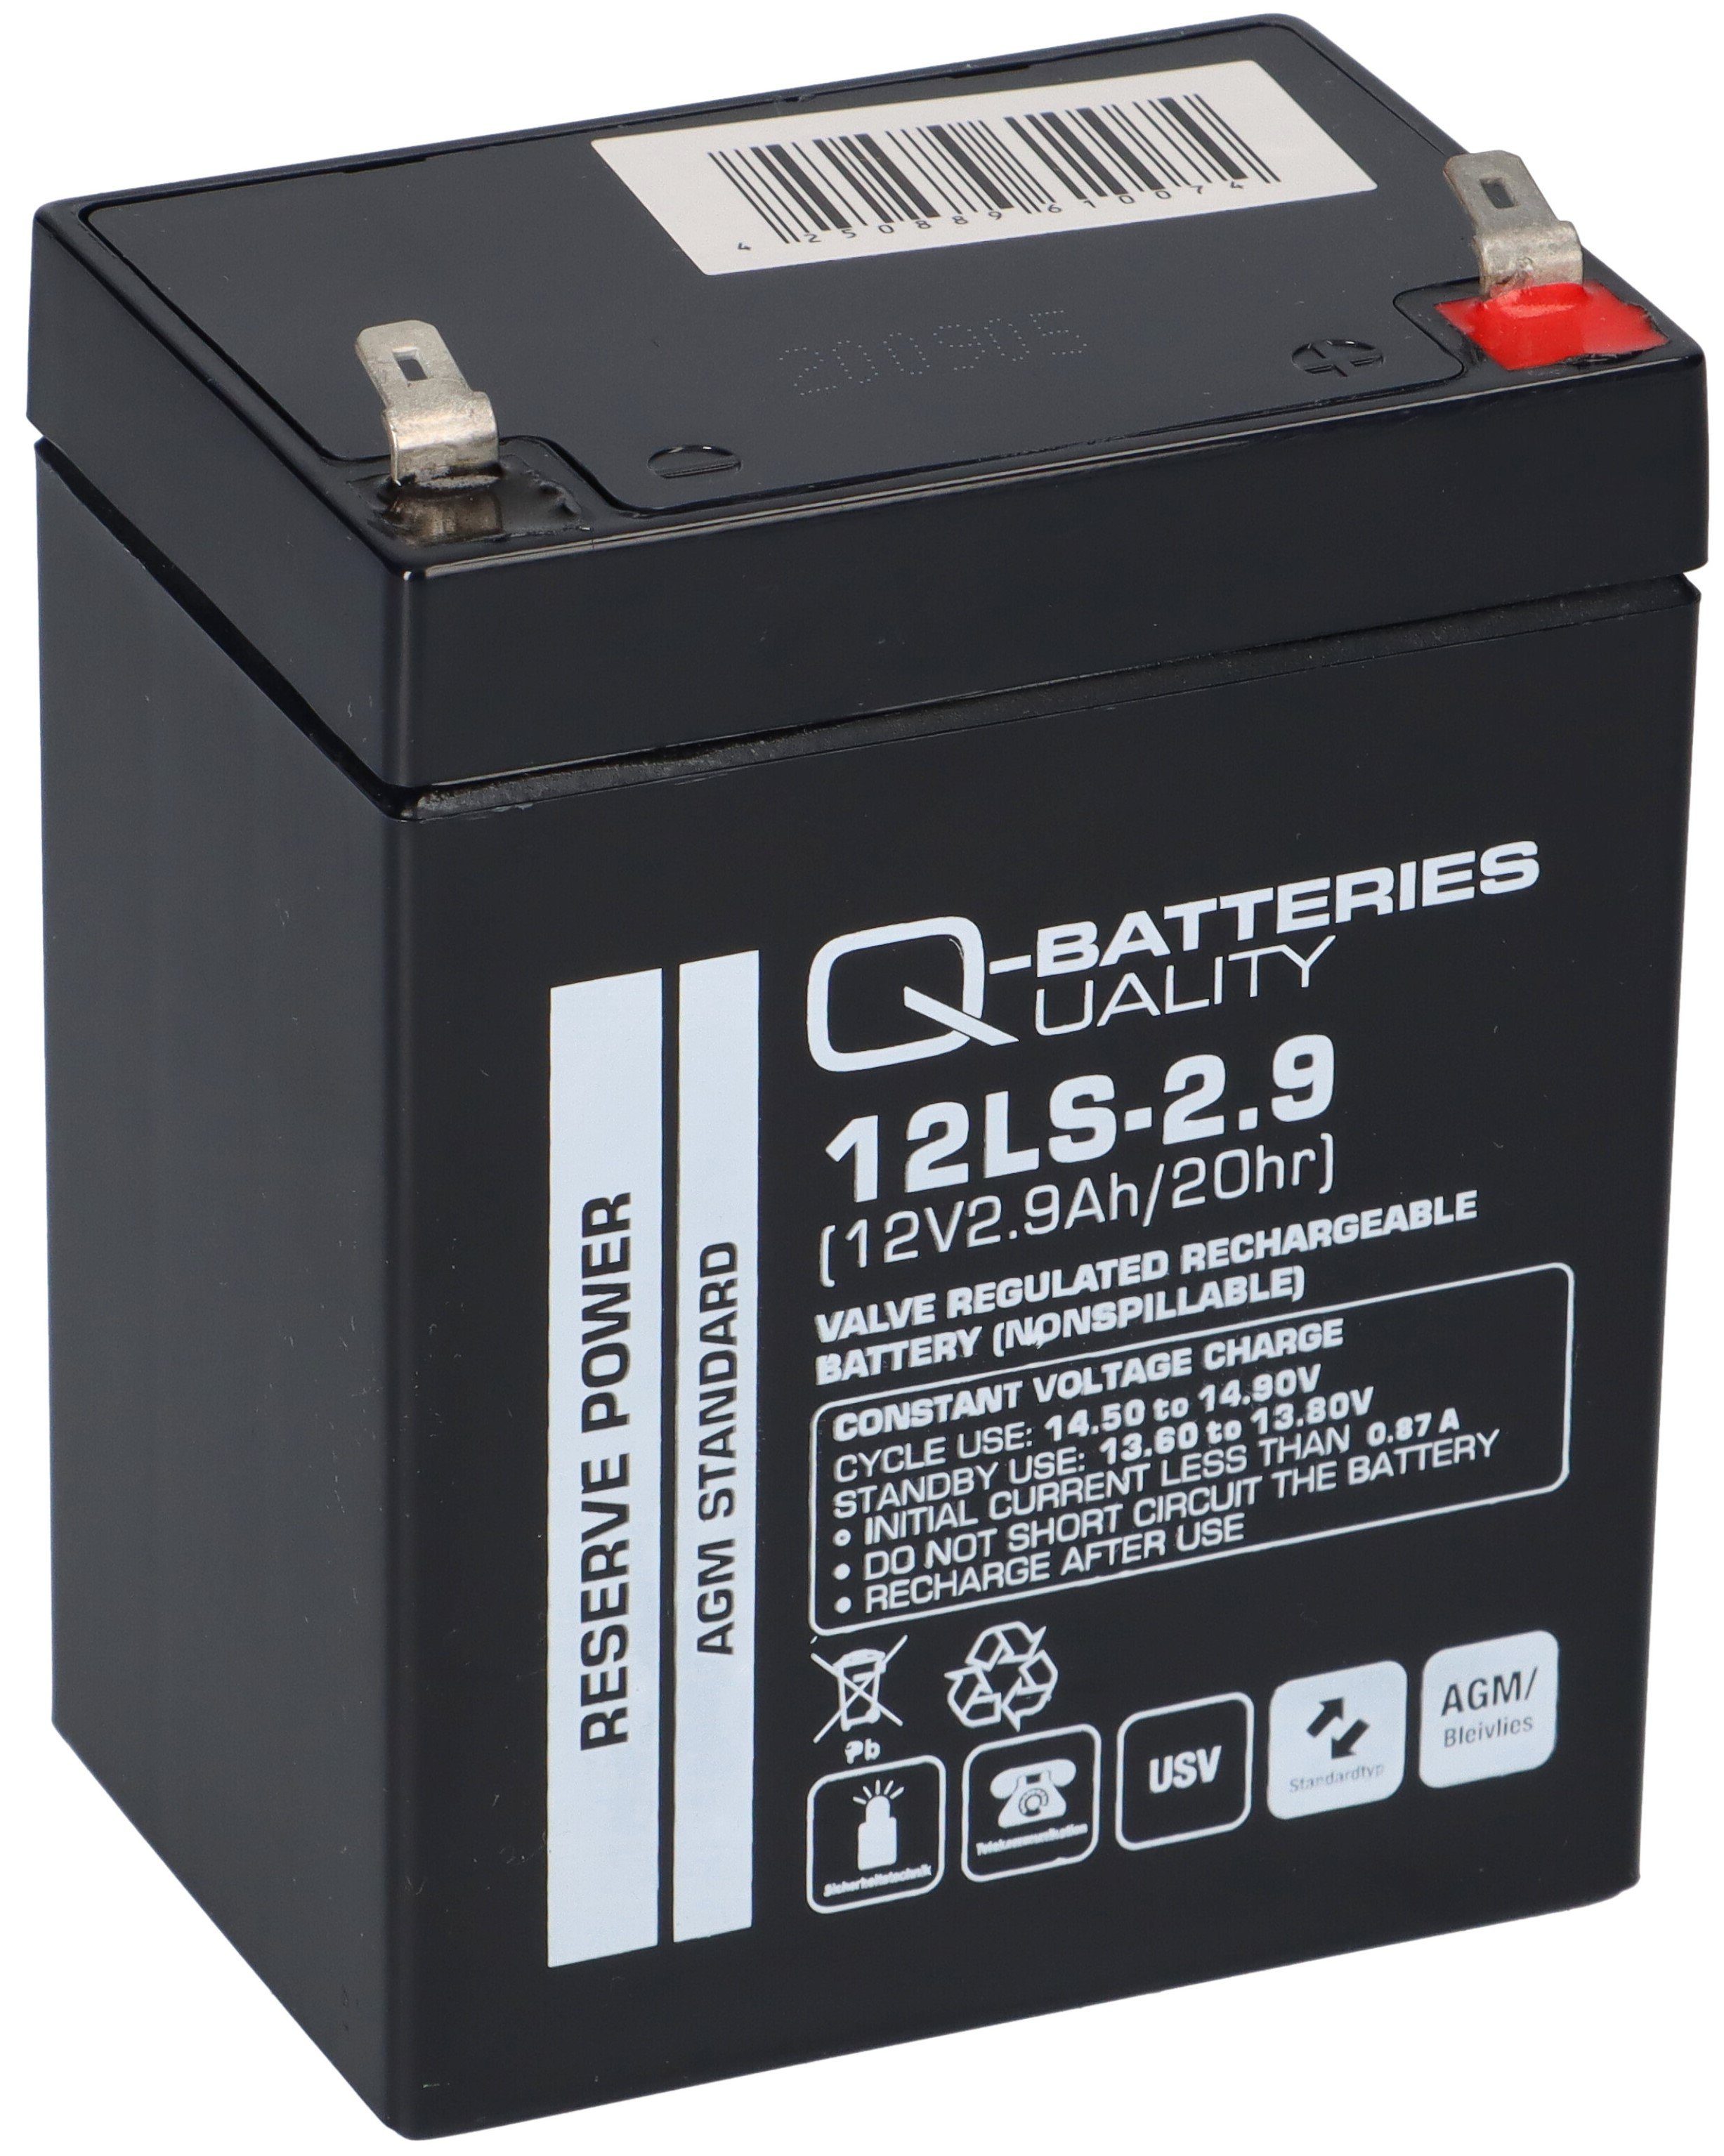 Q-Batteries 12V 2,9Ah Blei-Vlies Bleiakkus Q-Batteries Akku AGM / VRLA 12LS-2.9